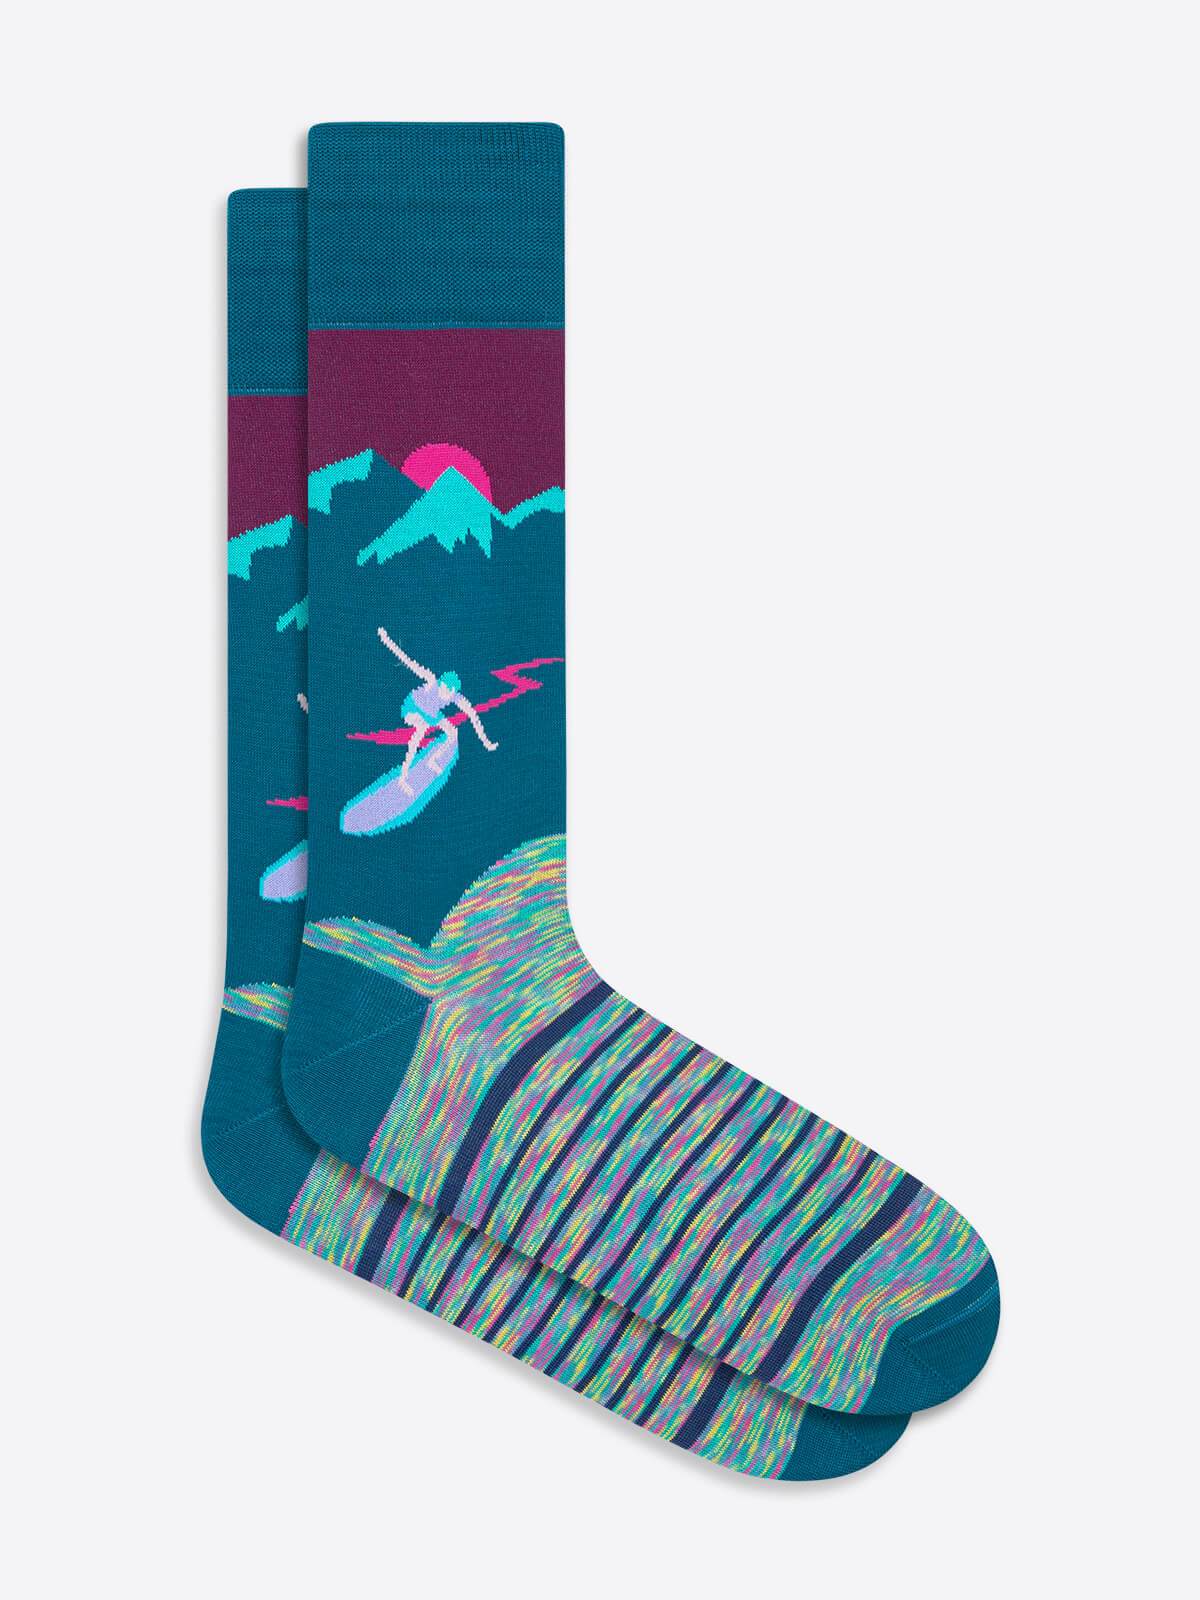 Surfer Mid-Calf Socks